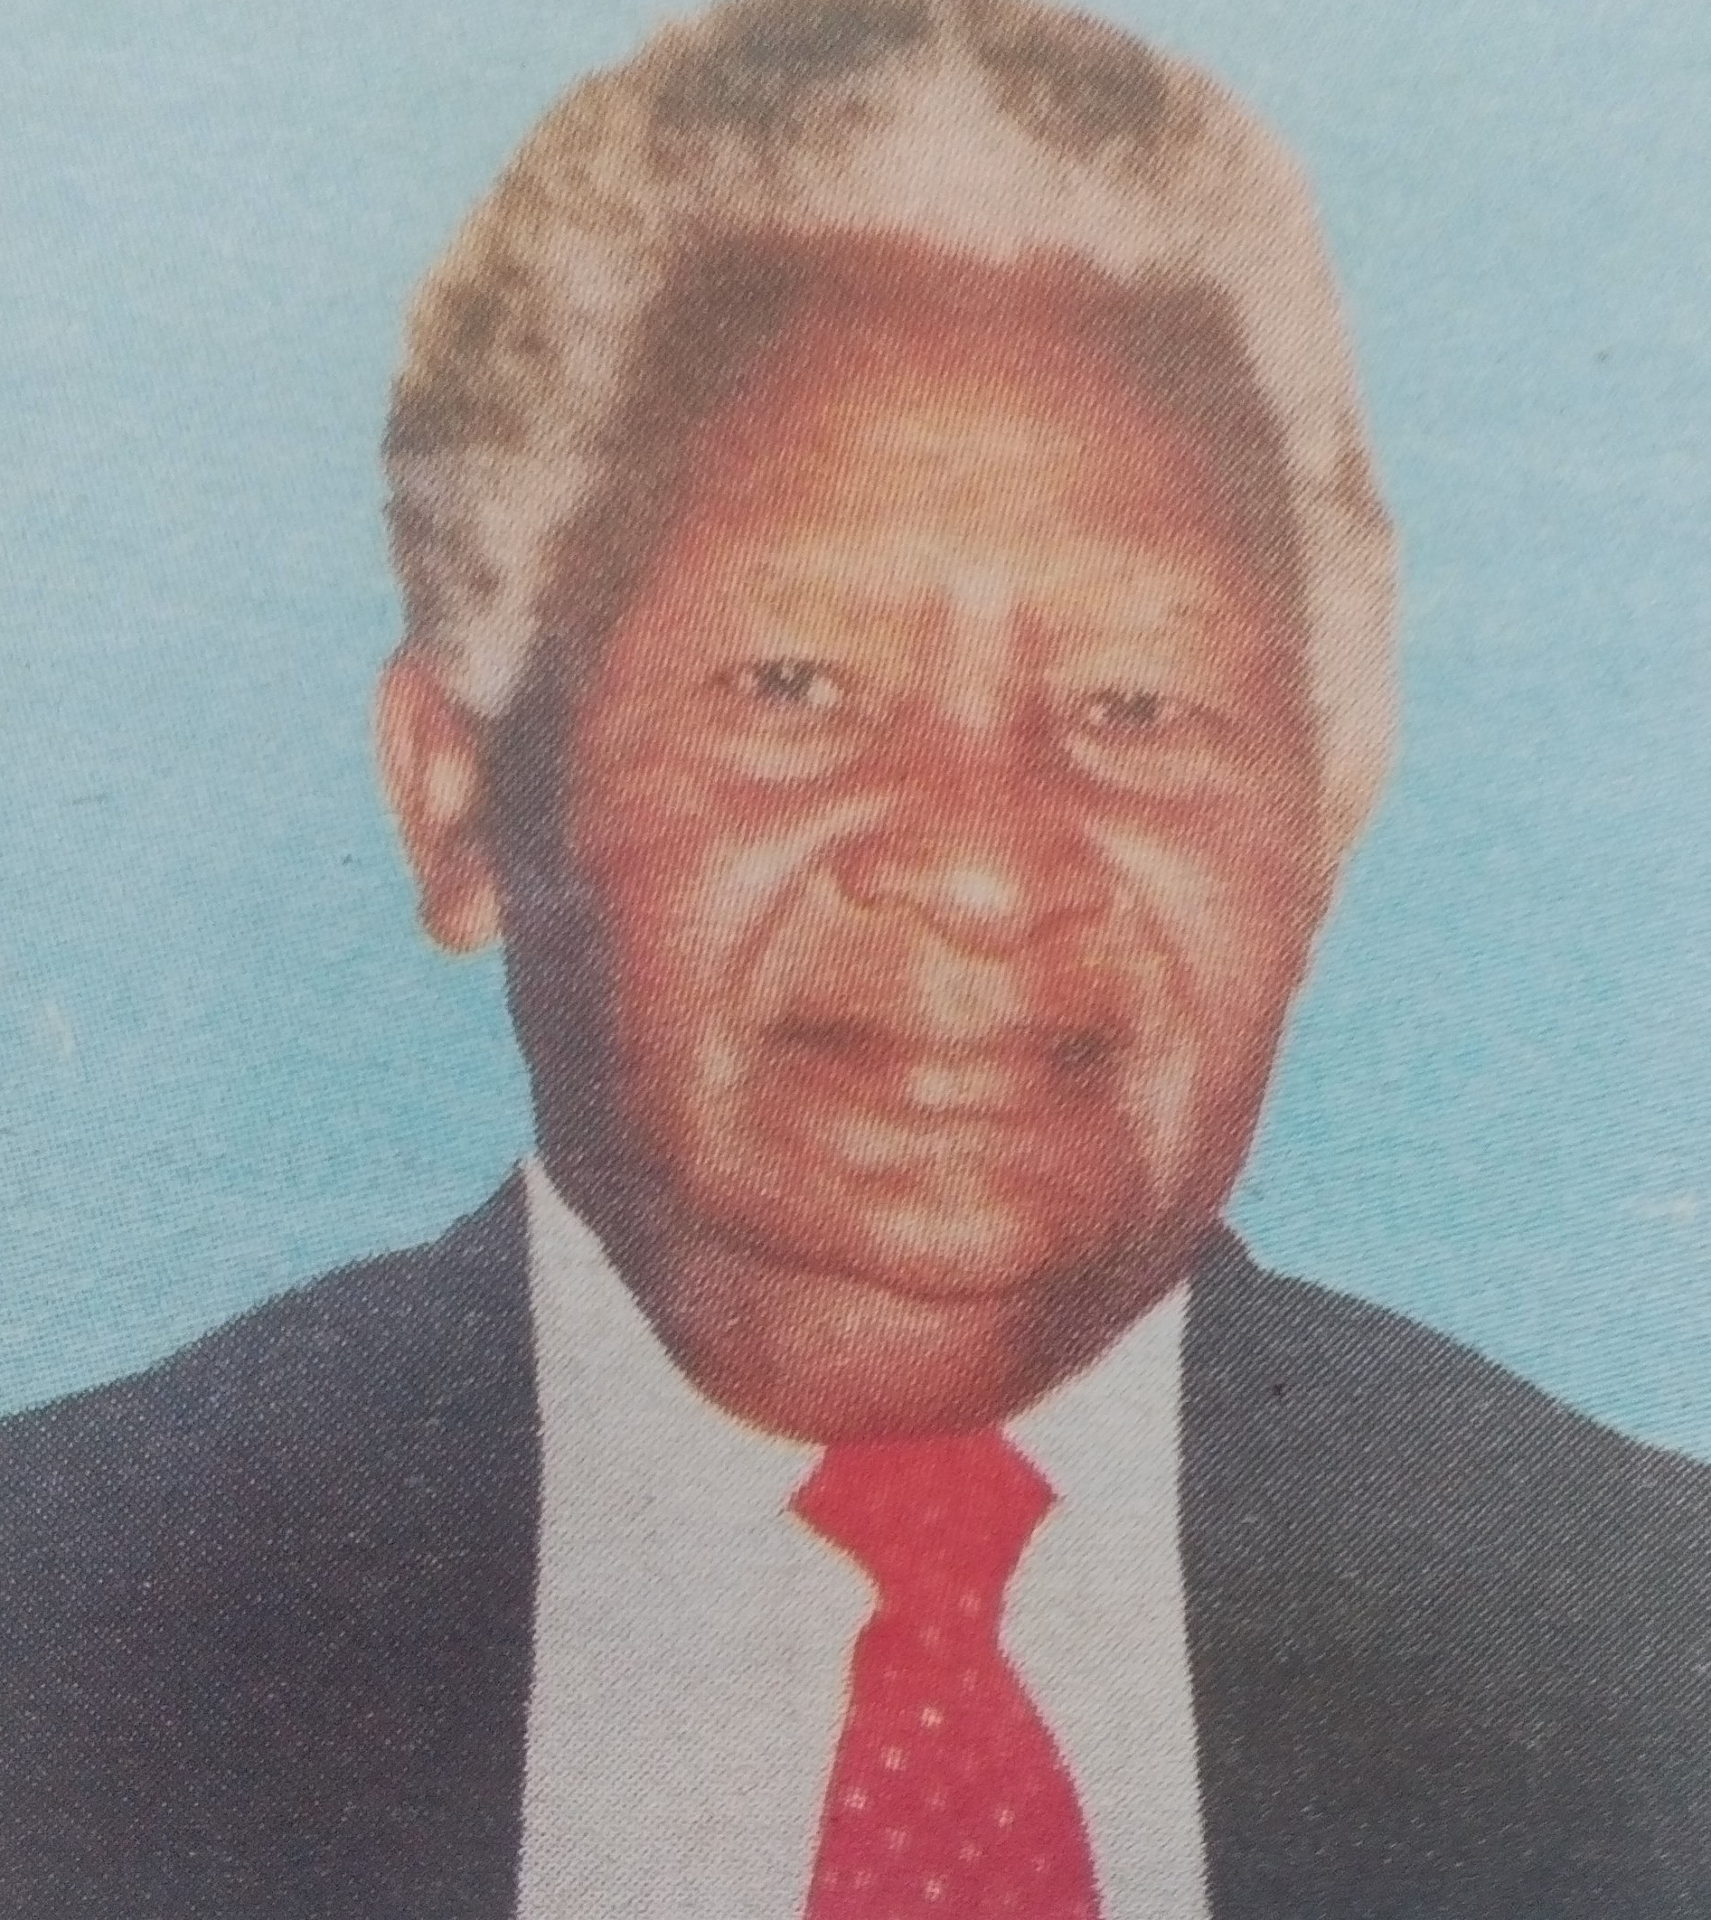 Obituary Image of William Nzioka Mutisya